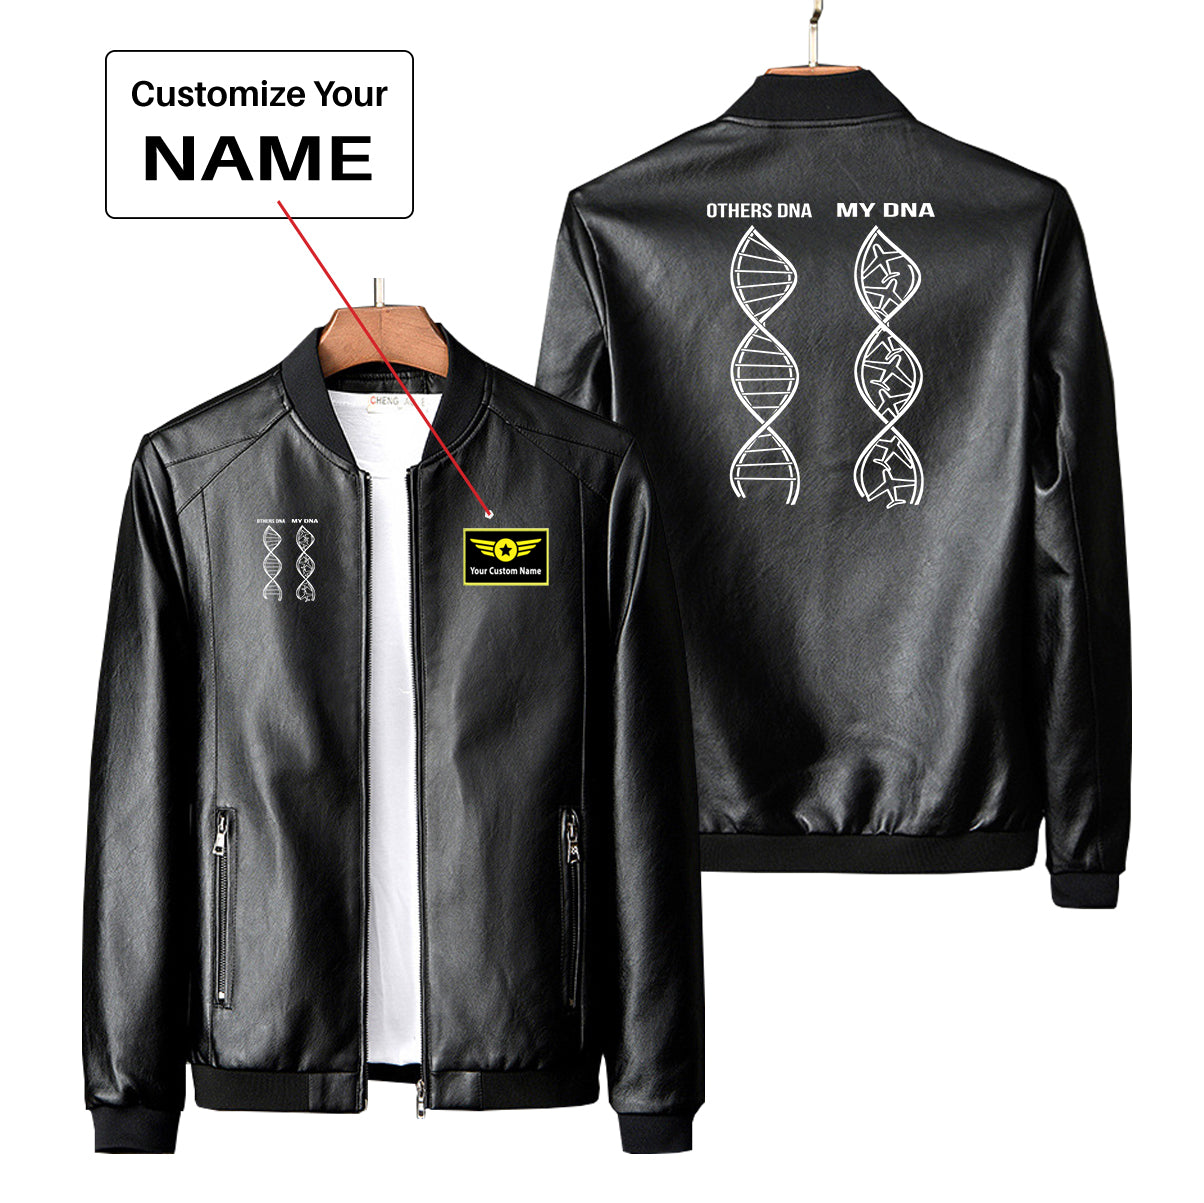 Aviation DNA Designed PU Leather Jackets